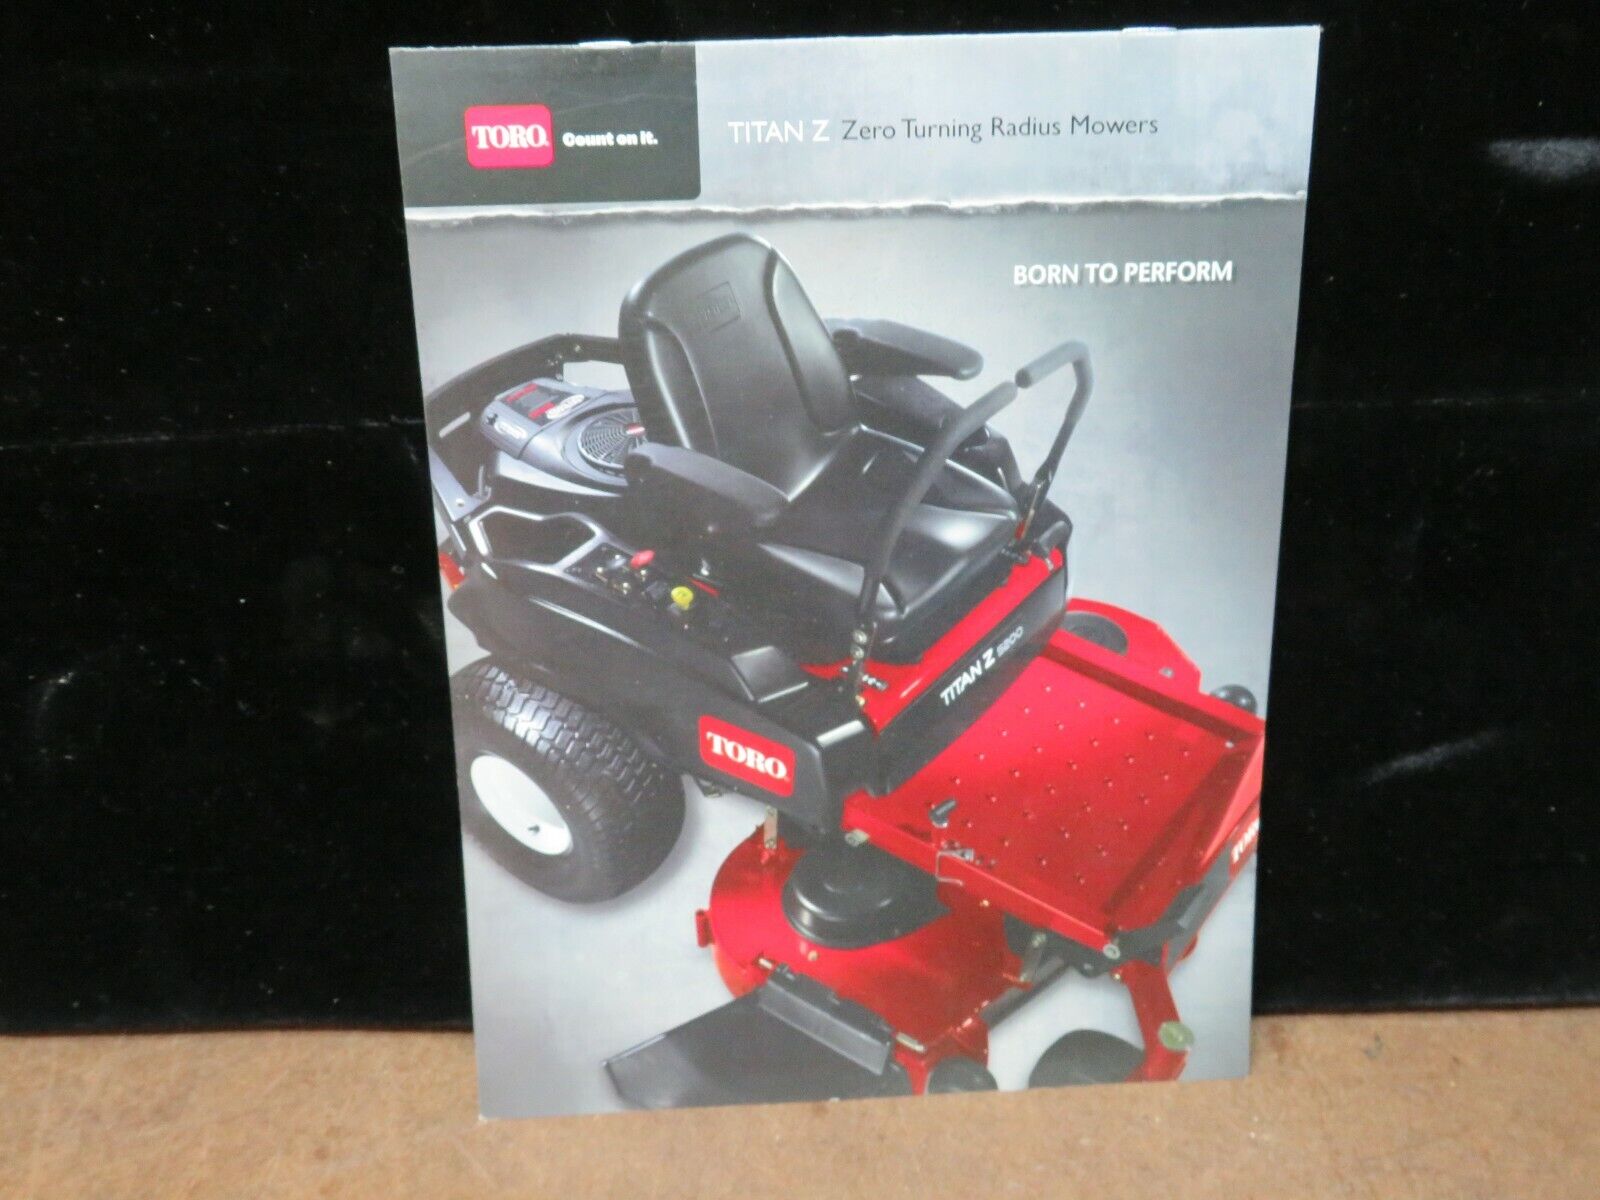 Wheel Horse toro titan Z advertising parts mower tractor manual brochure